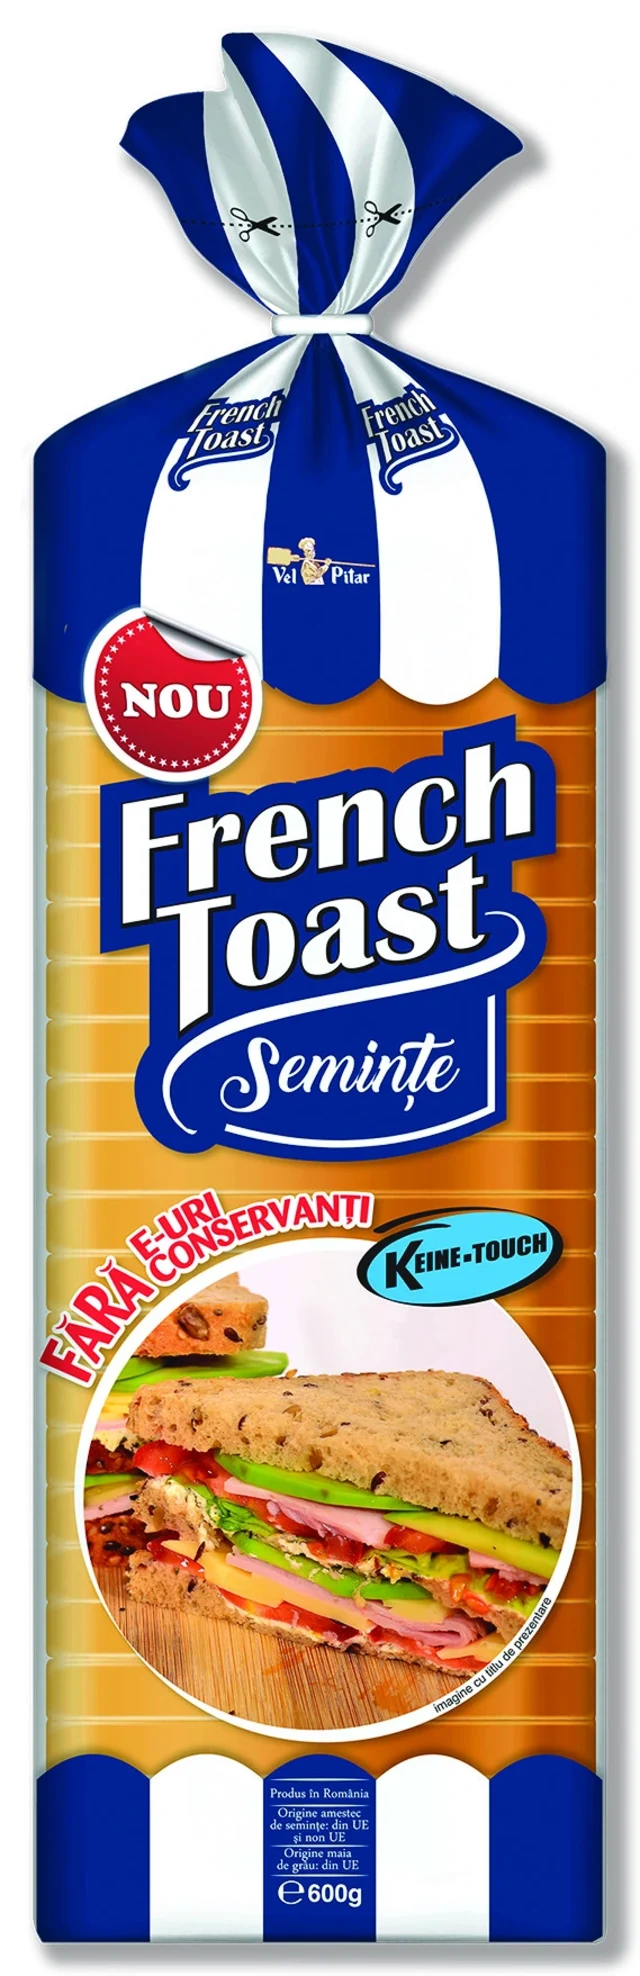 French Toast cu seminte VEL PITAR